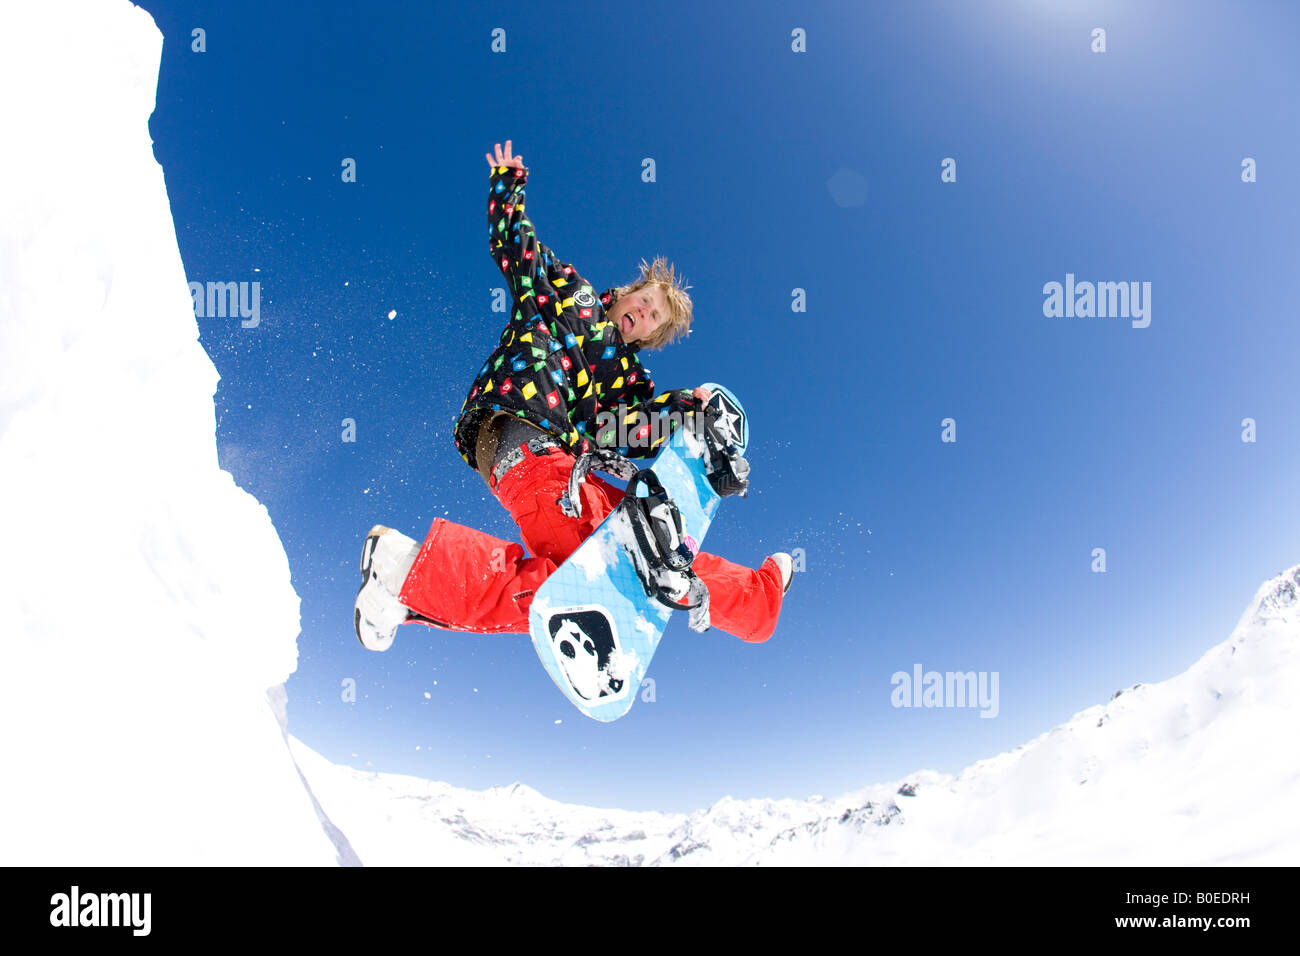 Snowboarder Jo Howard Air Guitar from Alpine jump. Stock Photo